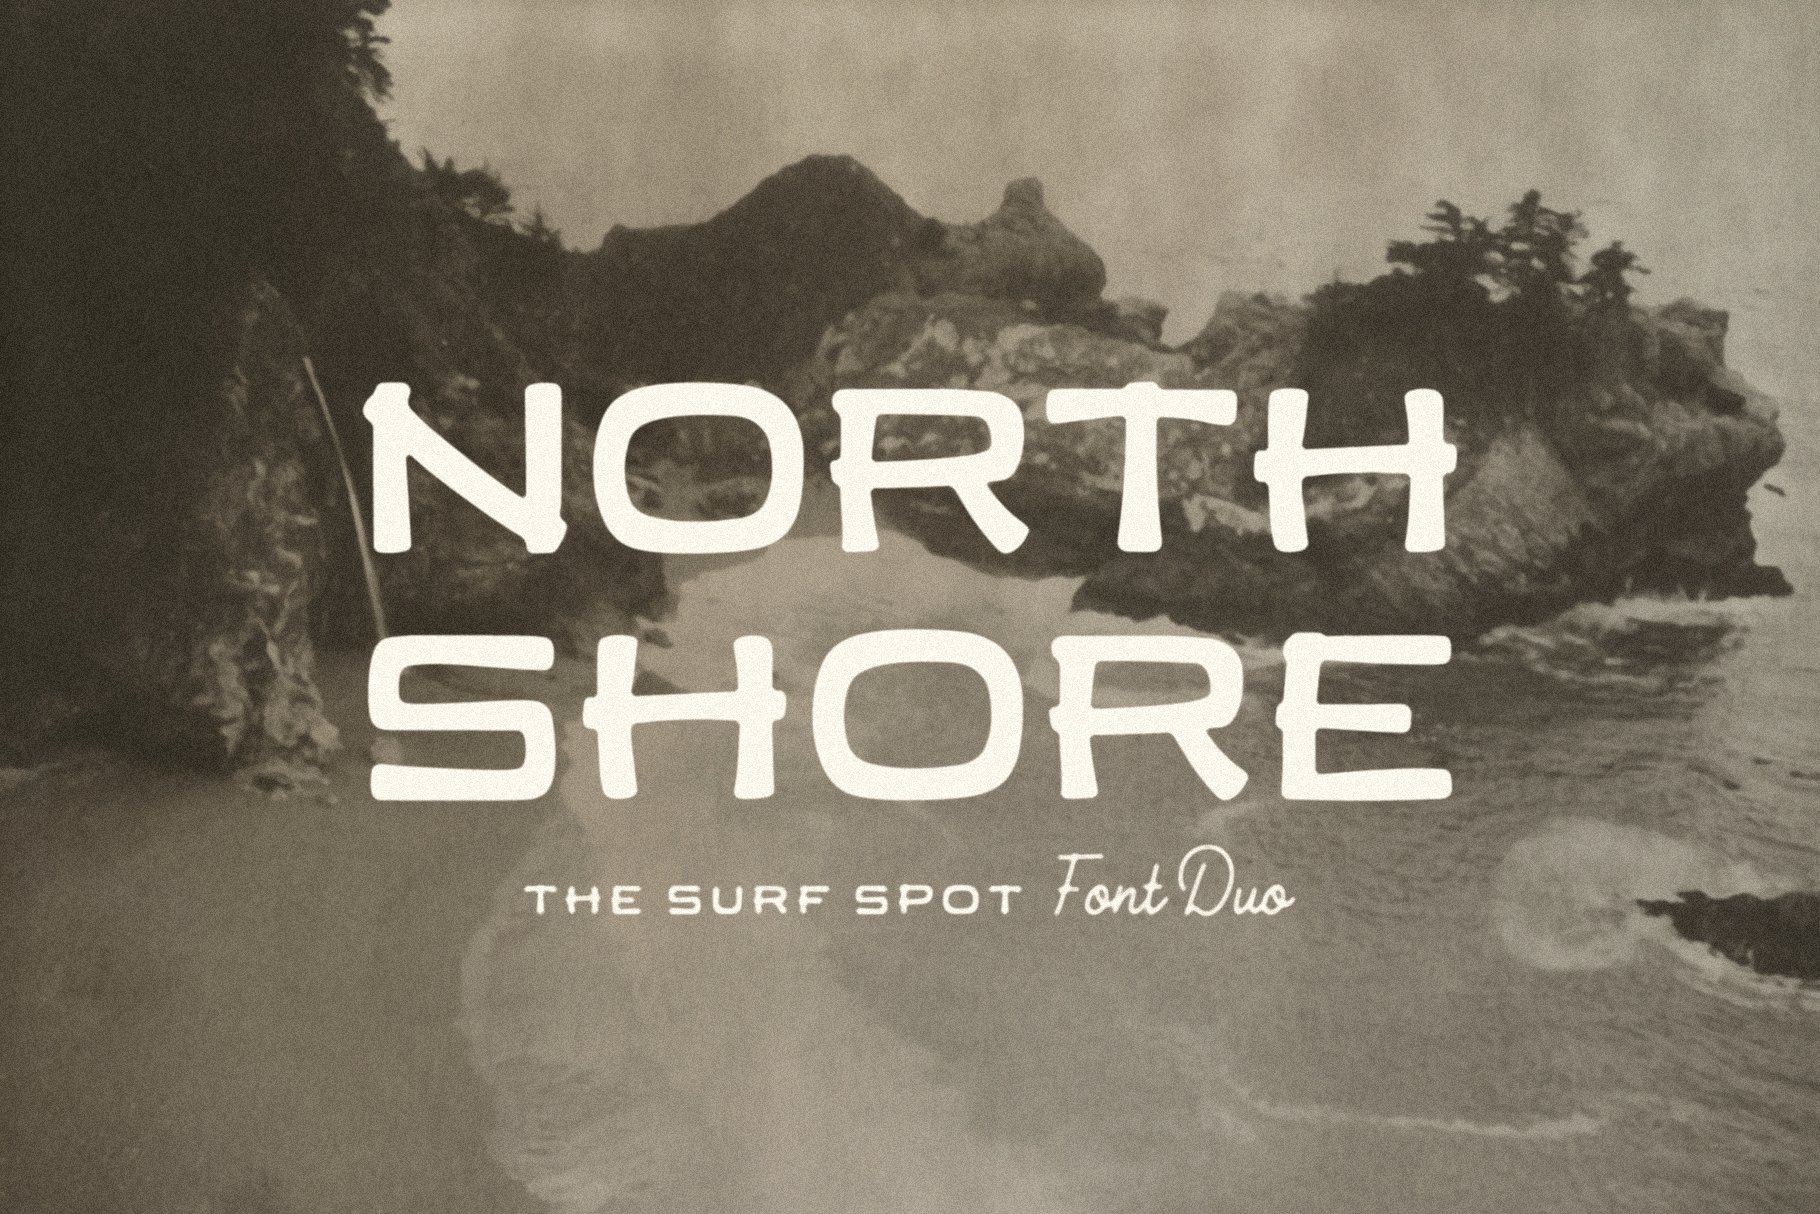 North Shore + Mavericks cover image.